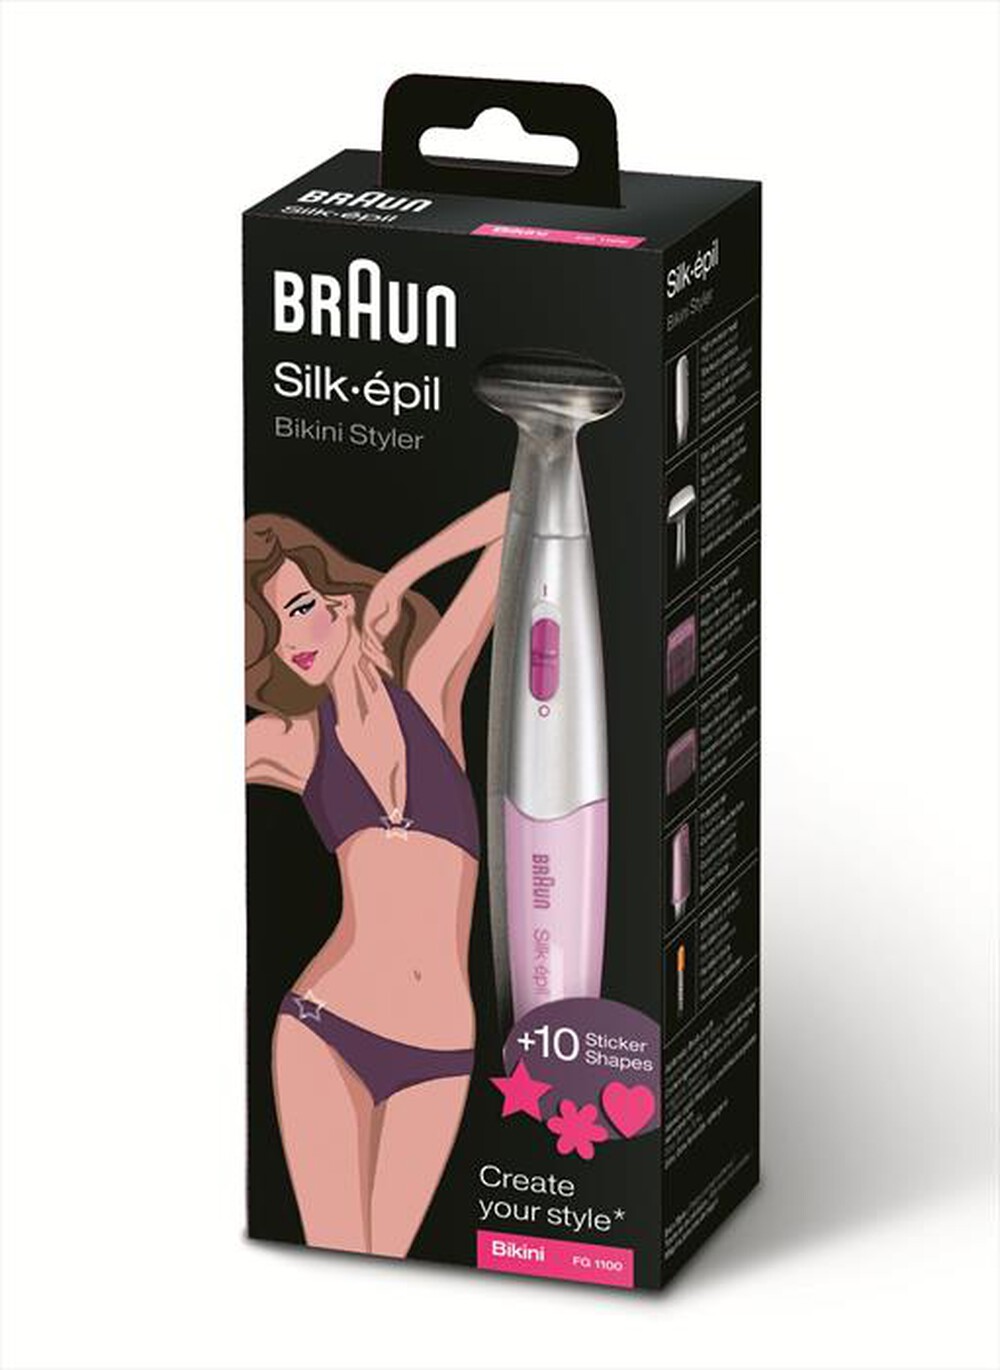 "BRAUN - Silk-épil Bikini Styler FG1100-Rosa"